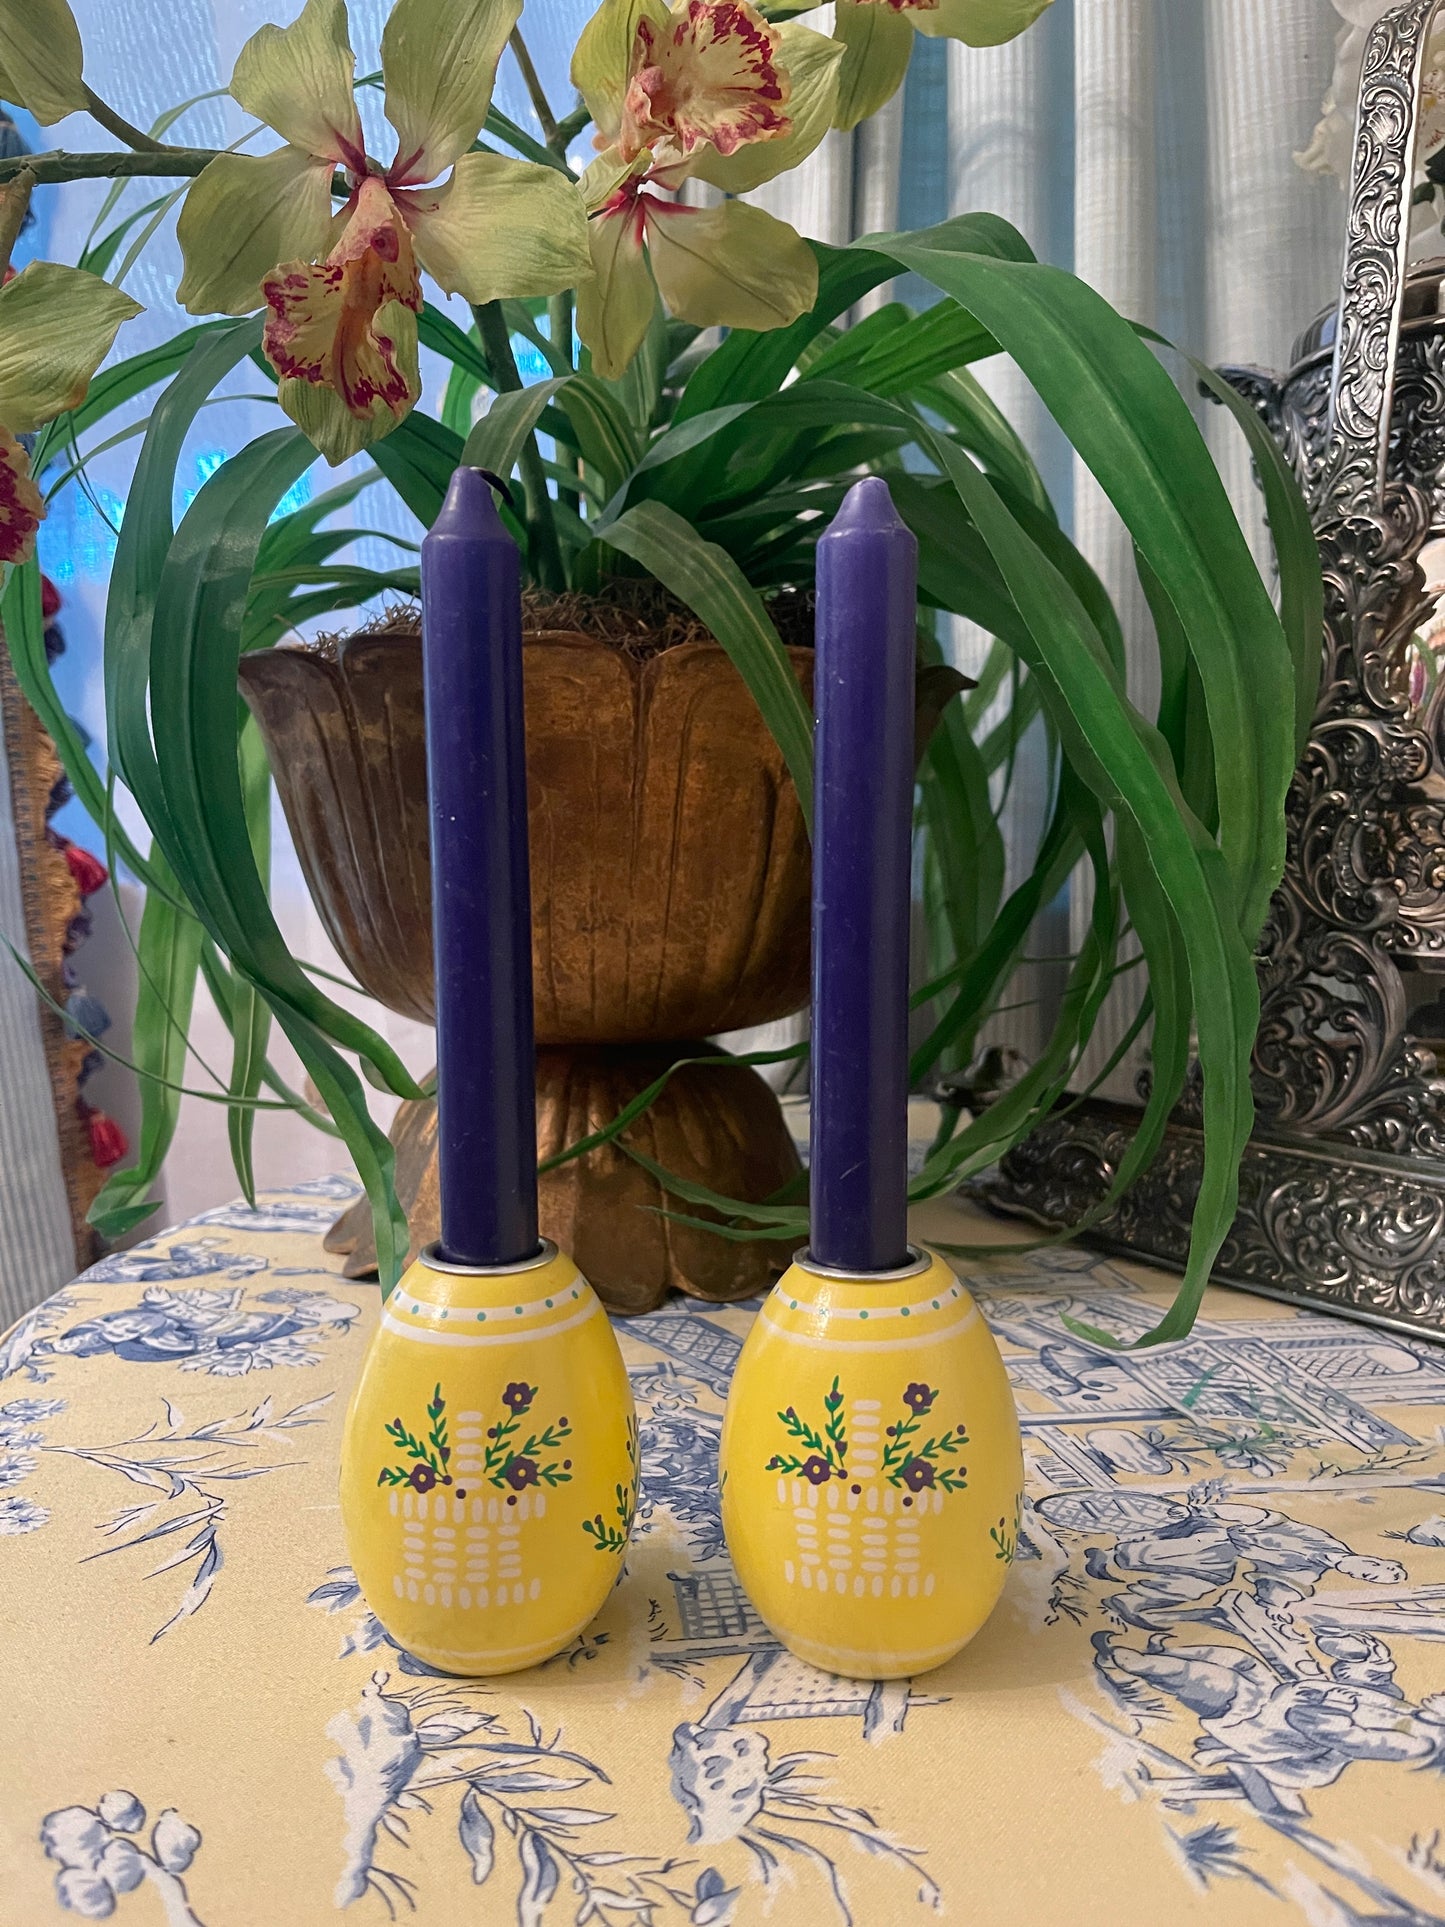 Vibrant Easter Egg Spring Candlesticks, Wood Egg Candlesticks, Hand Painted Spring Easter Decor